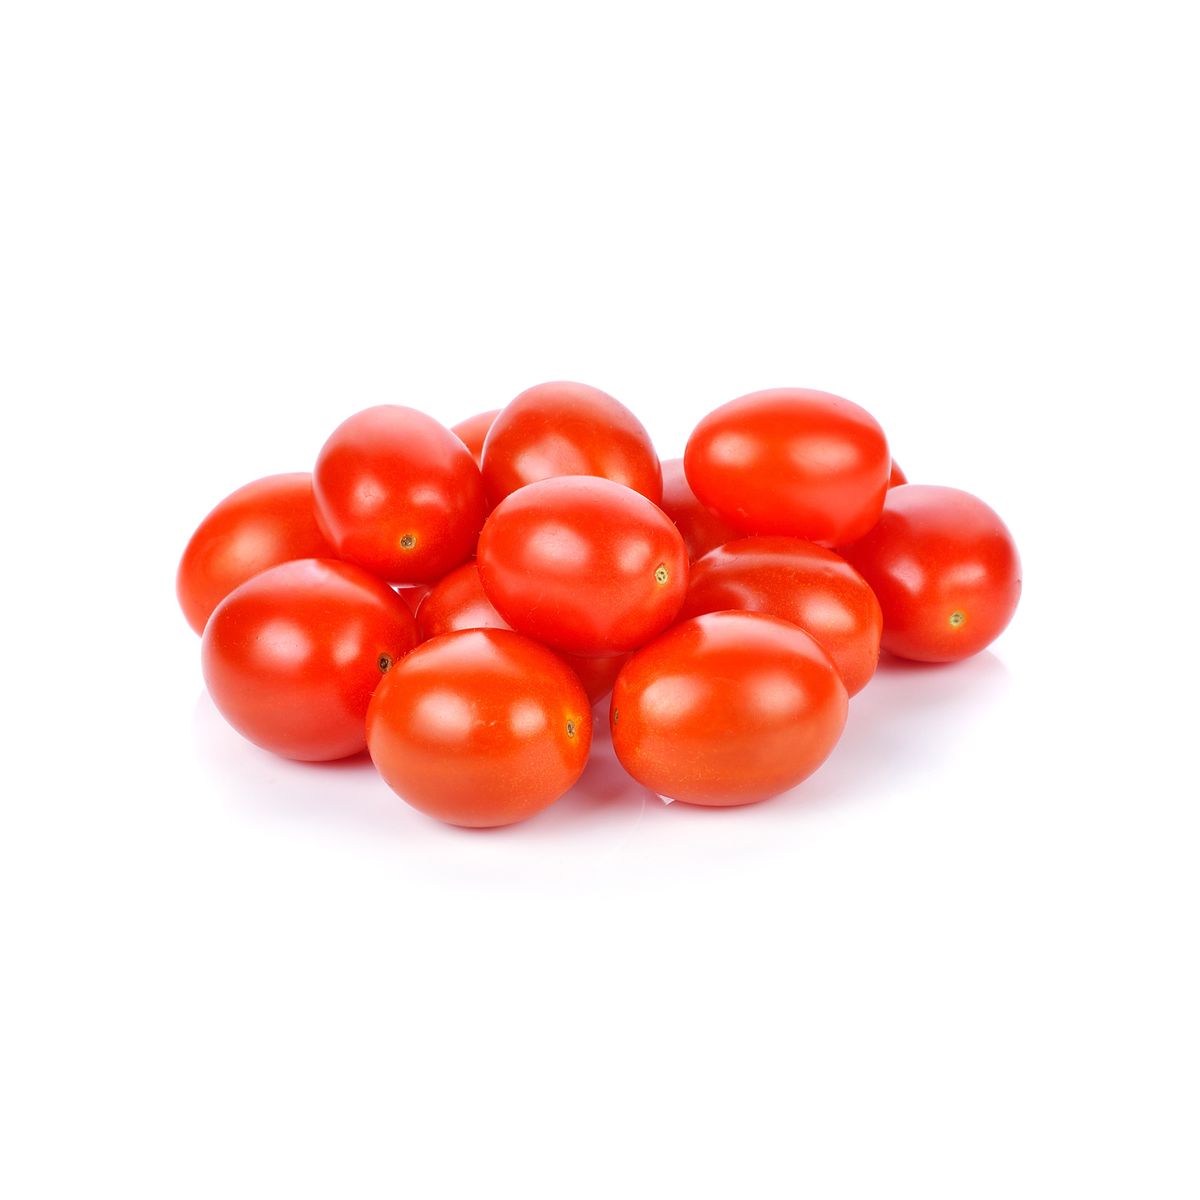 Cherry tomato - 250g